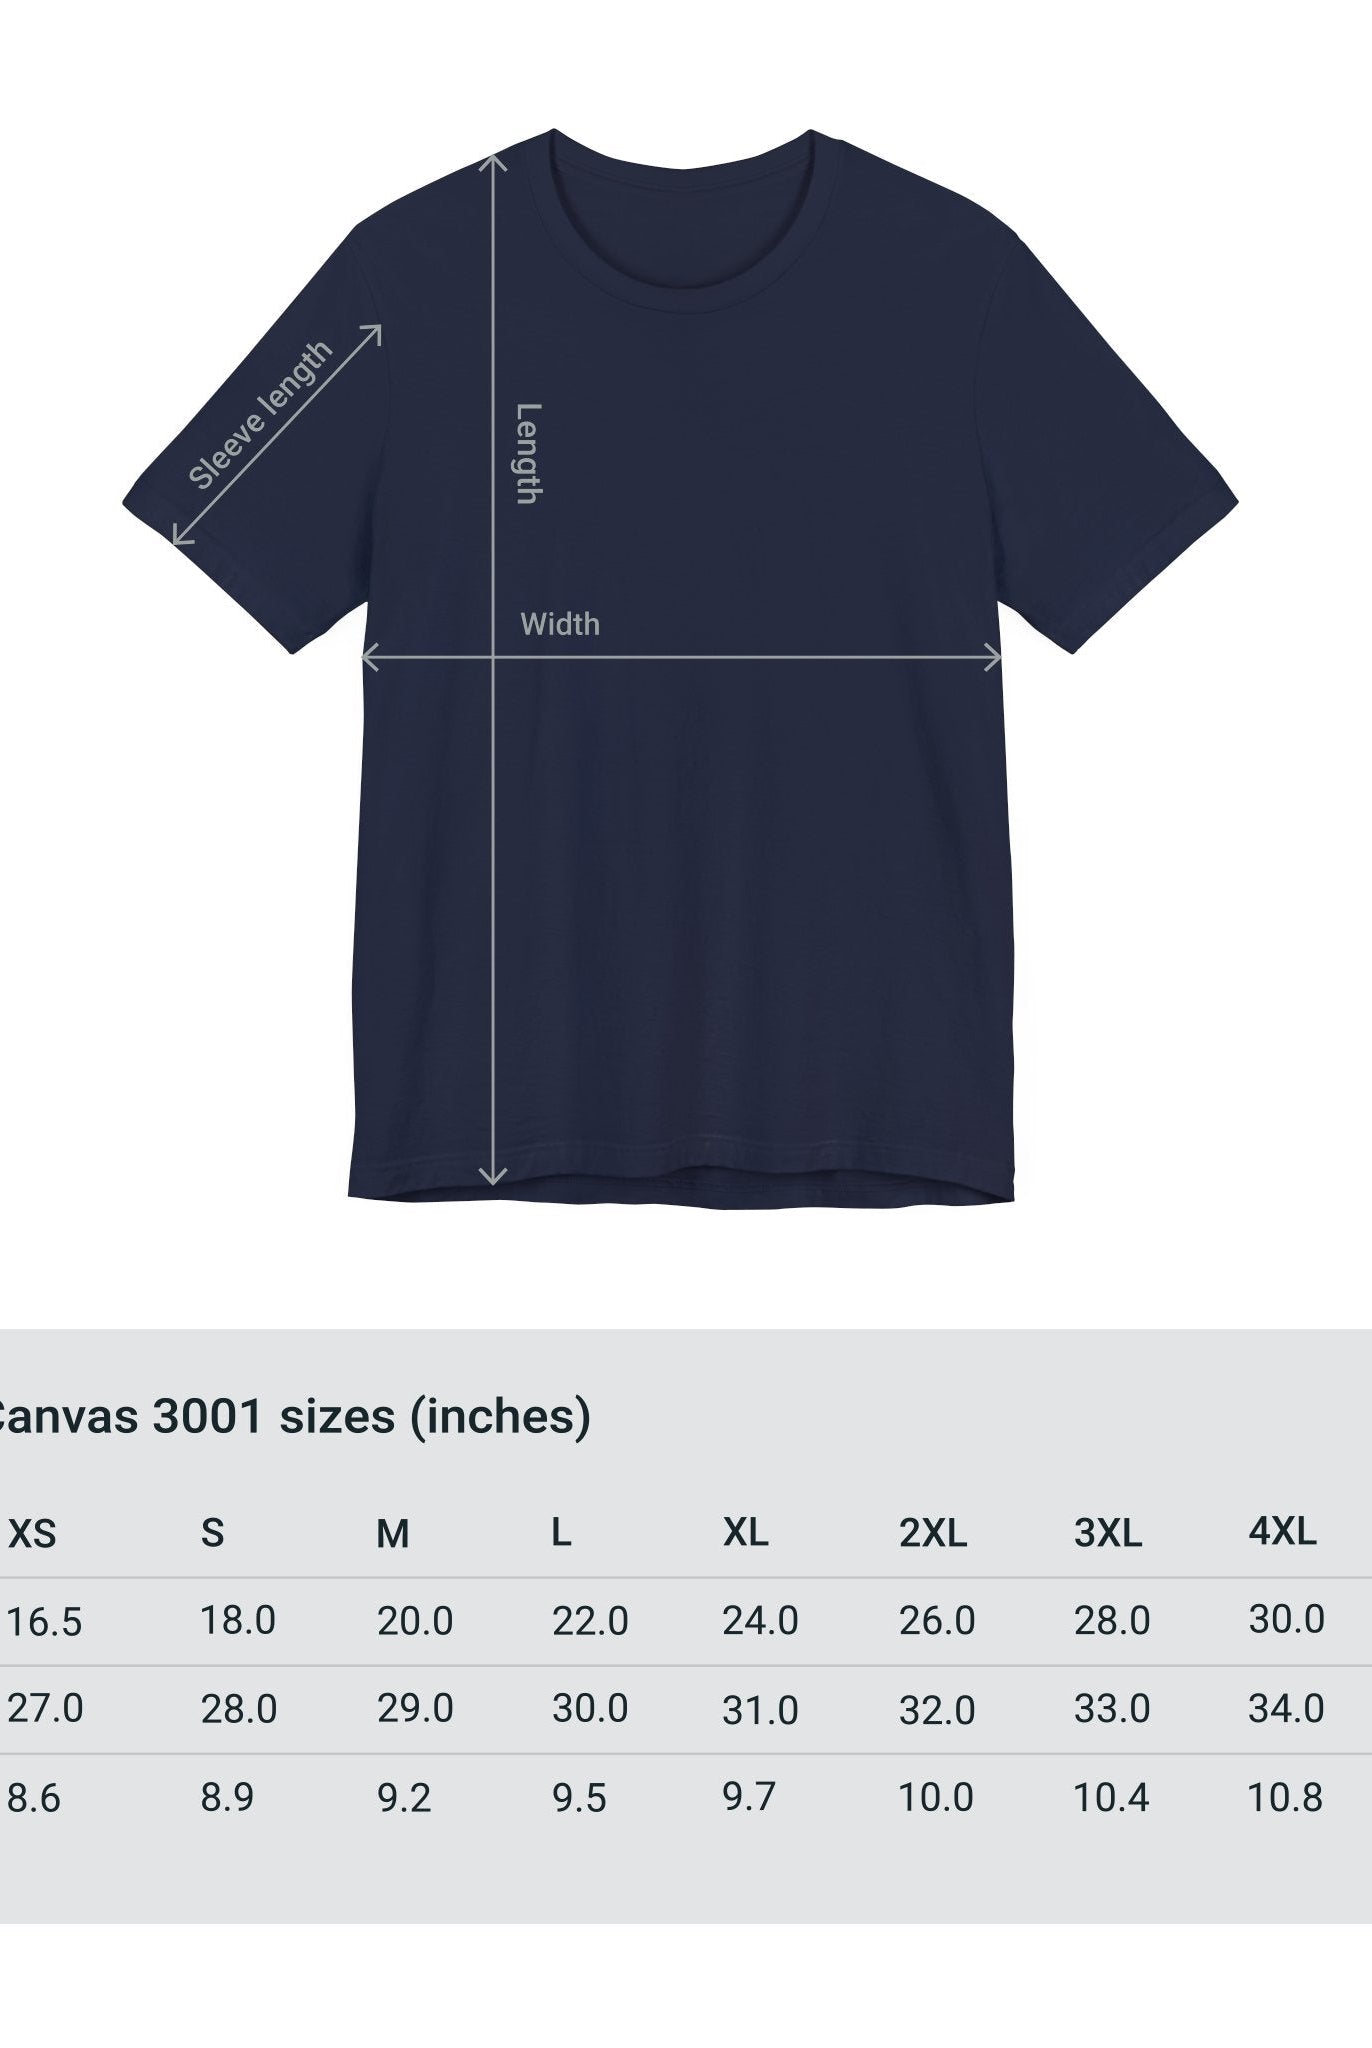 Adventure Unlimited Surfing T-Shirt Navy DTG Printed Size Measurements - Bella & Canvas EU